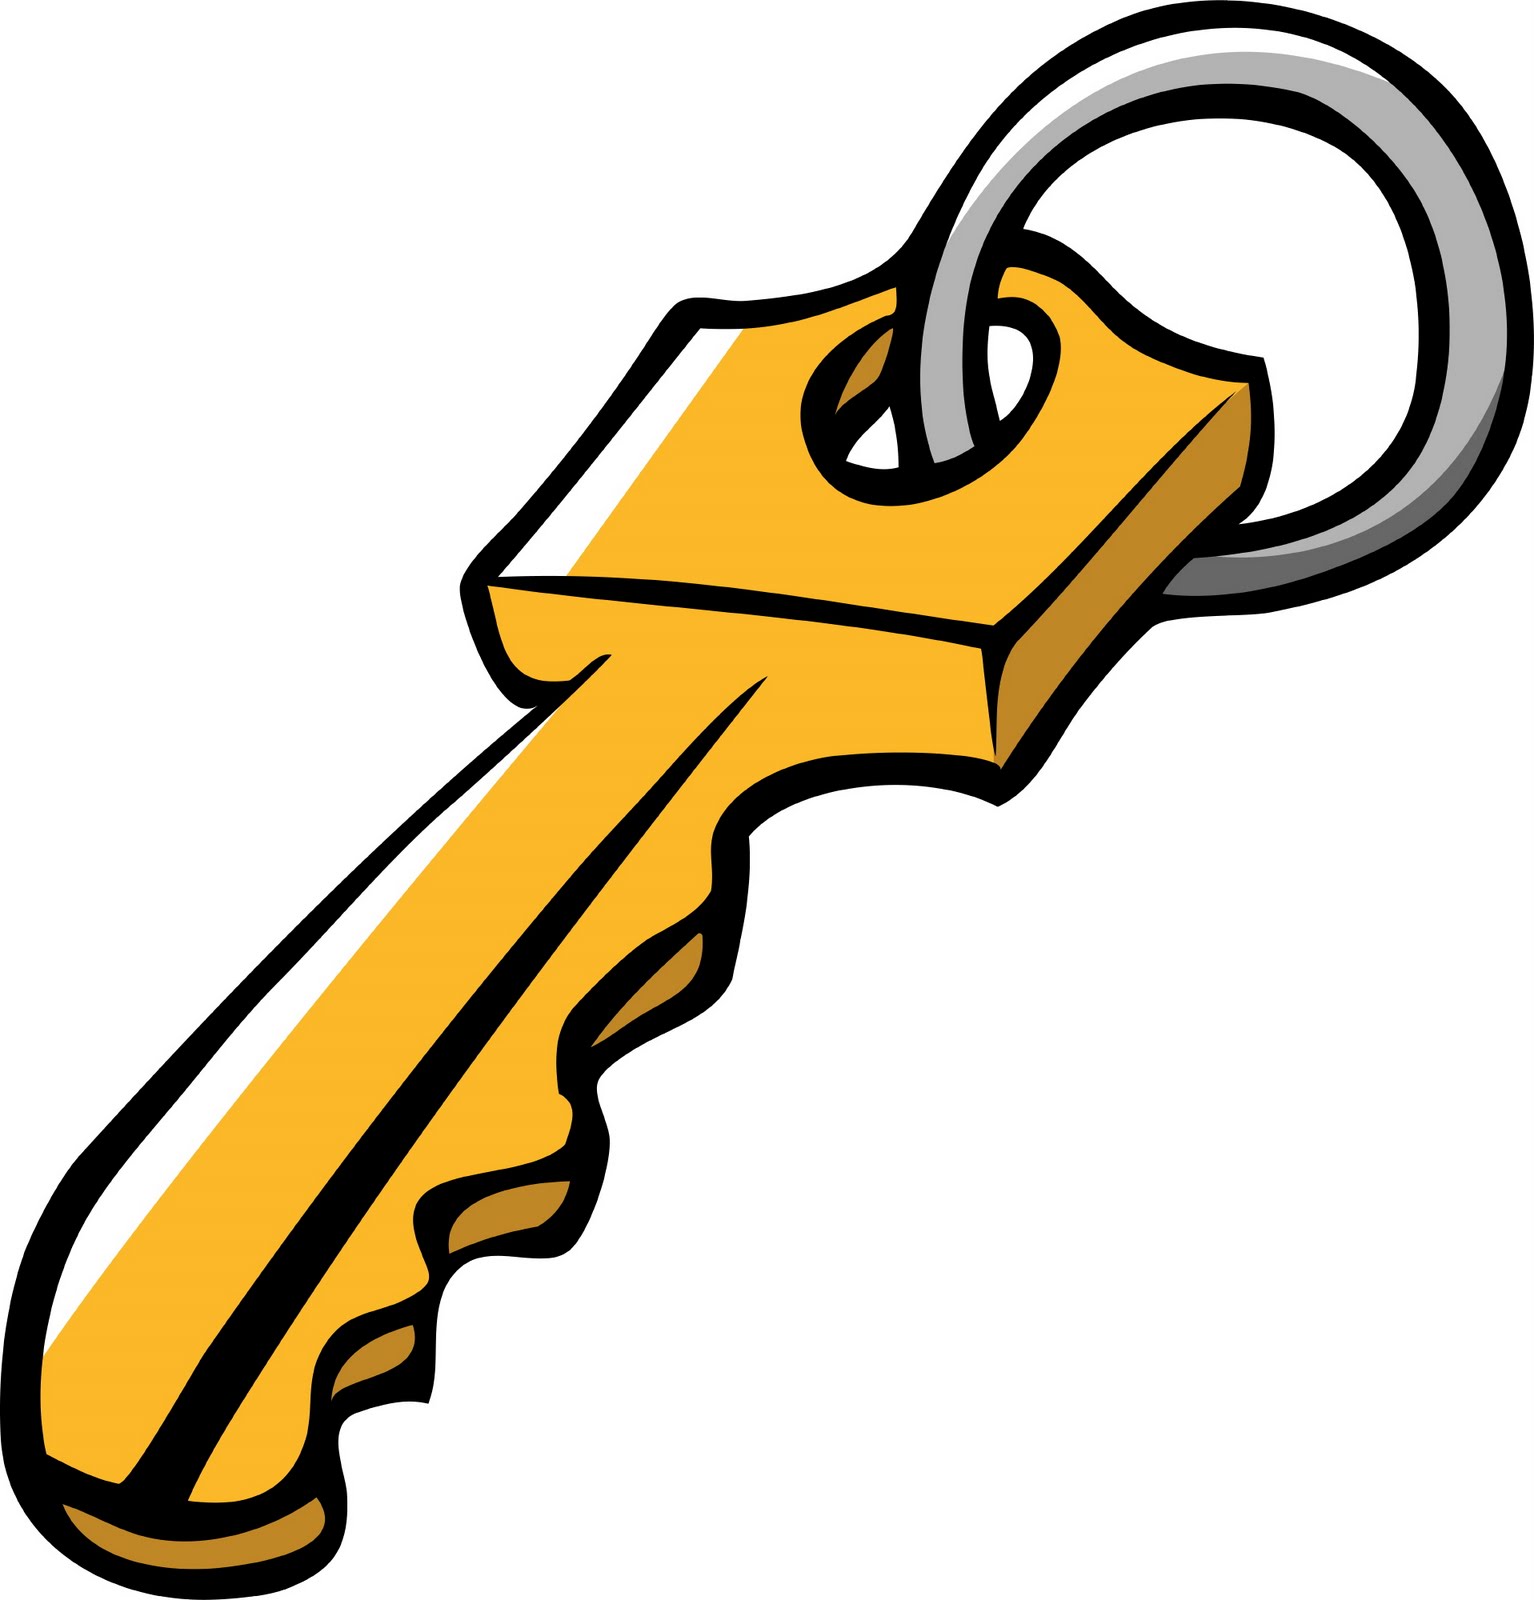 Key clip art vector key .